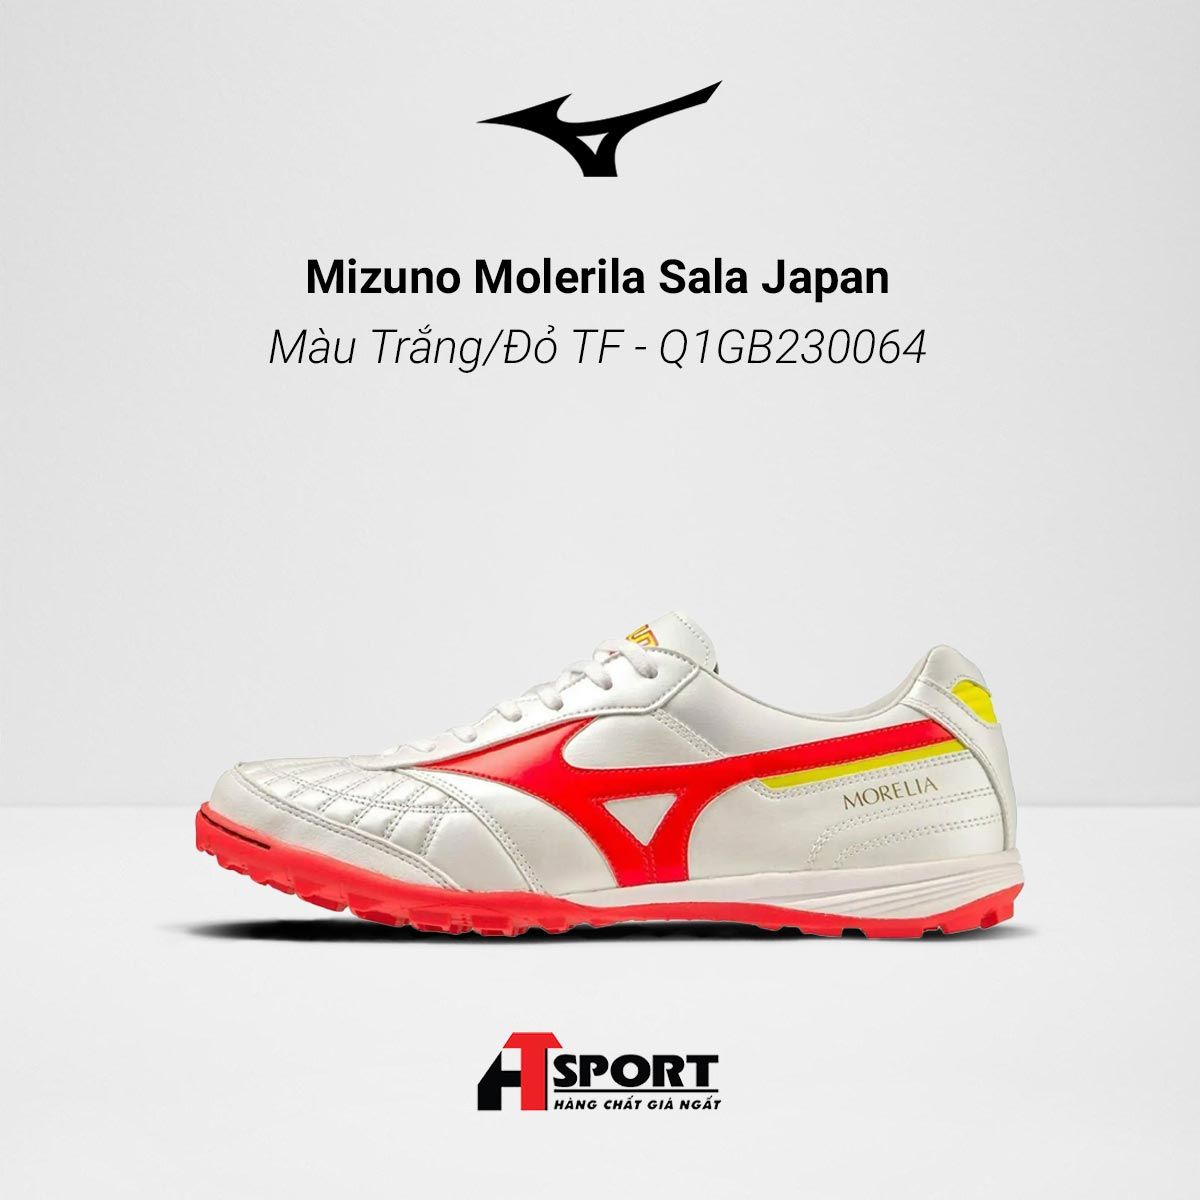  Mizuno Morelia Sala Japan - Màu Trắng/Đỏ TF - Q1GB230064 